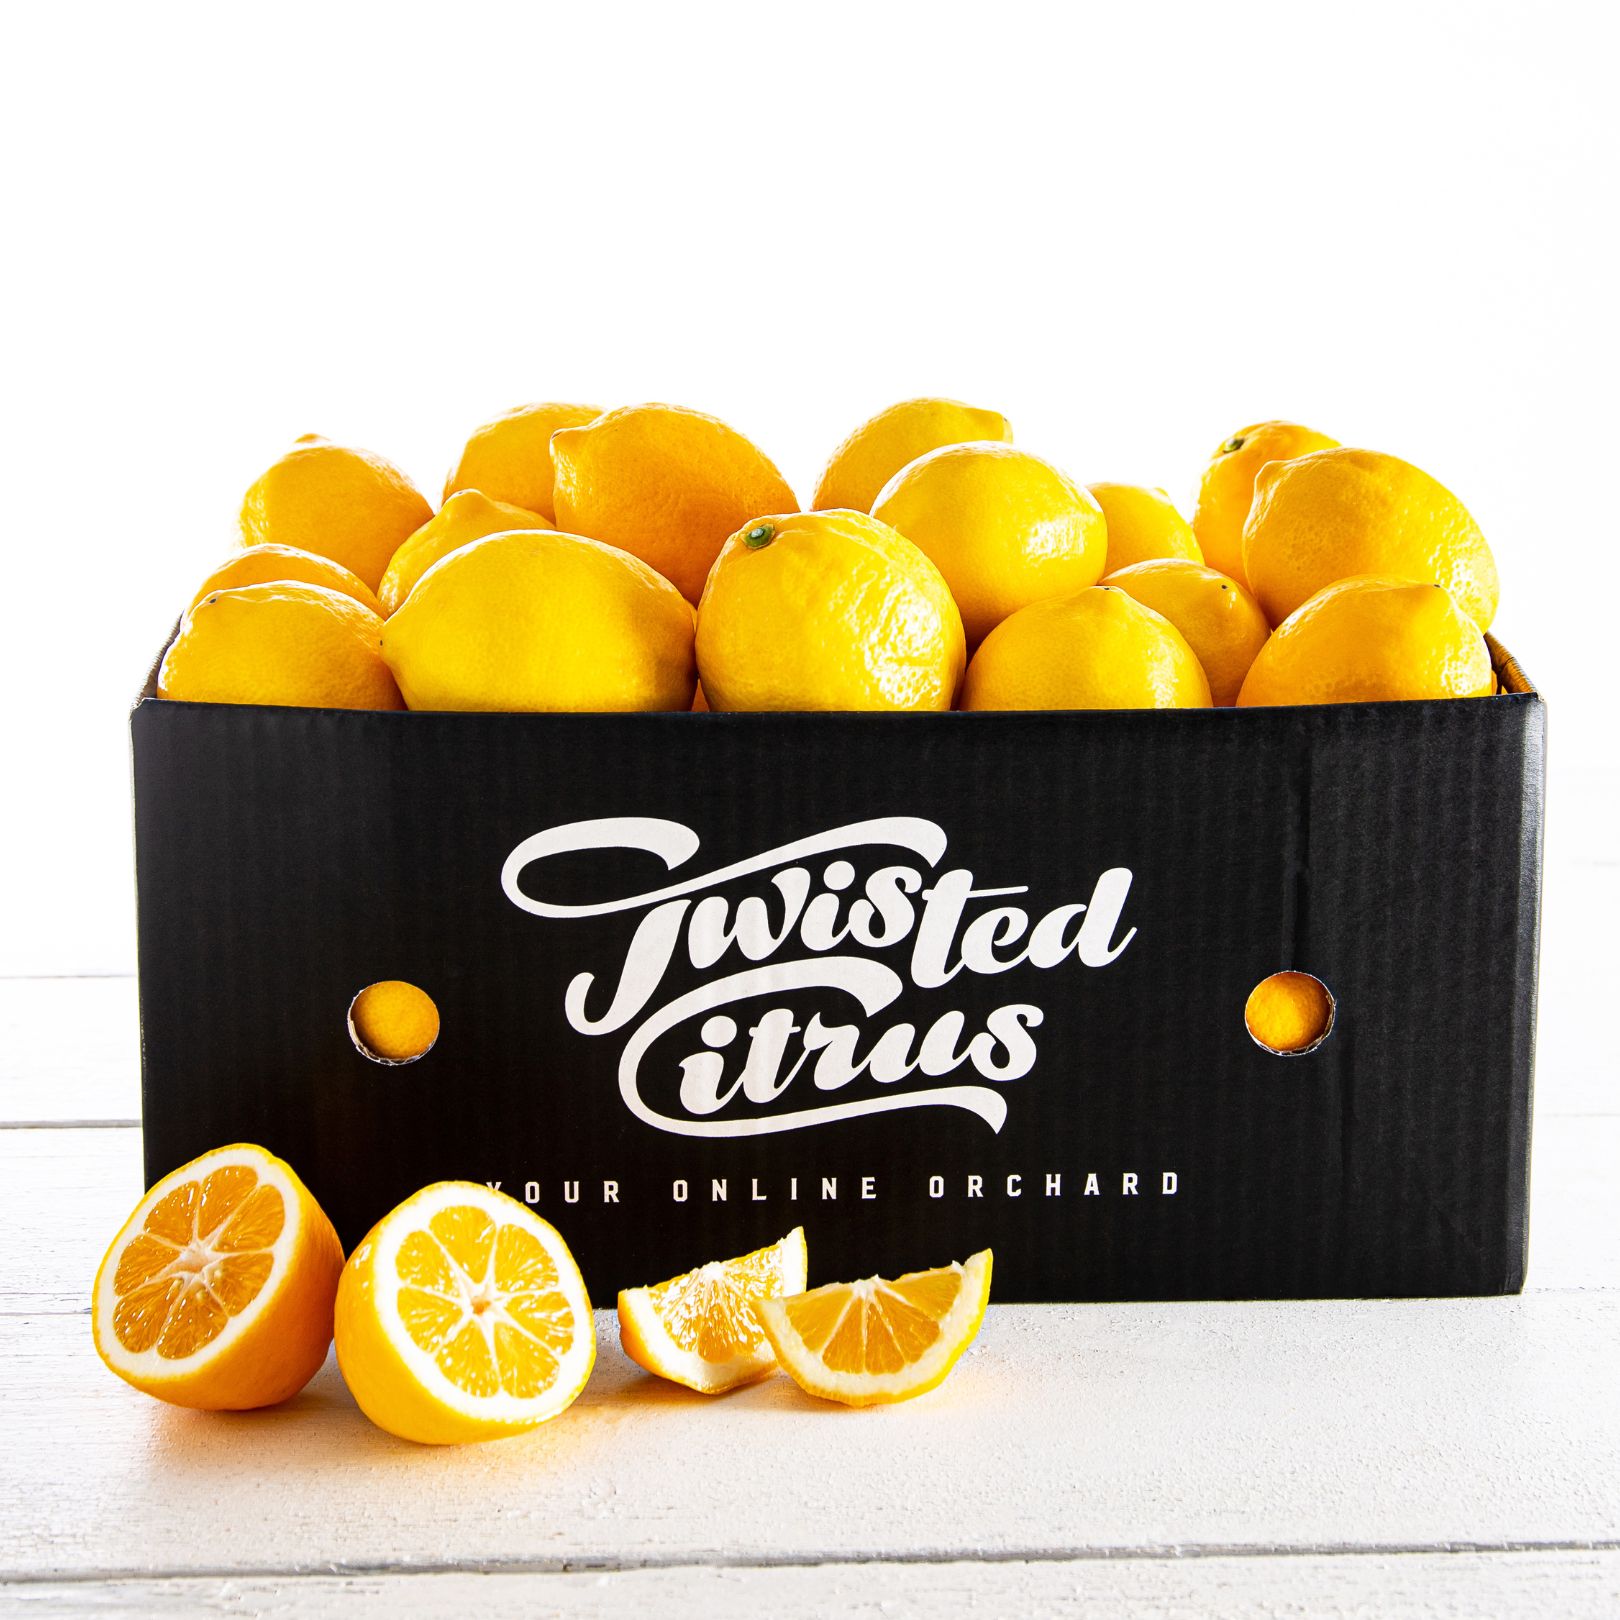 Lemons - Yen Ben fruit box delivery nz